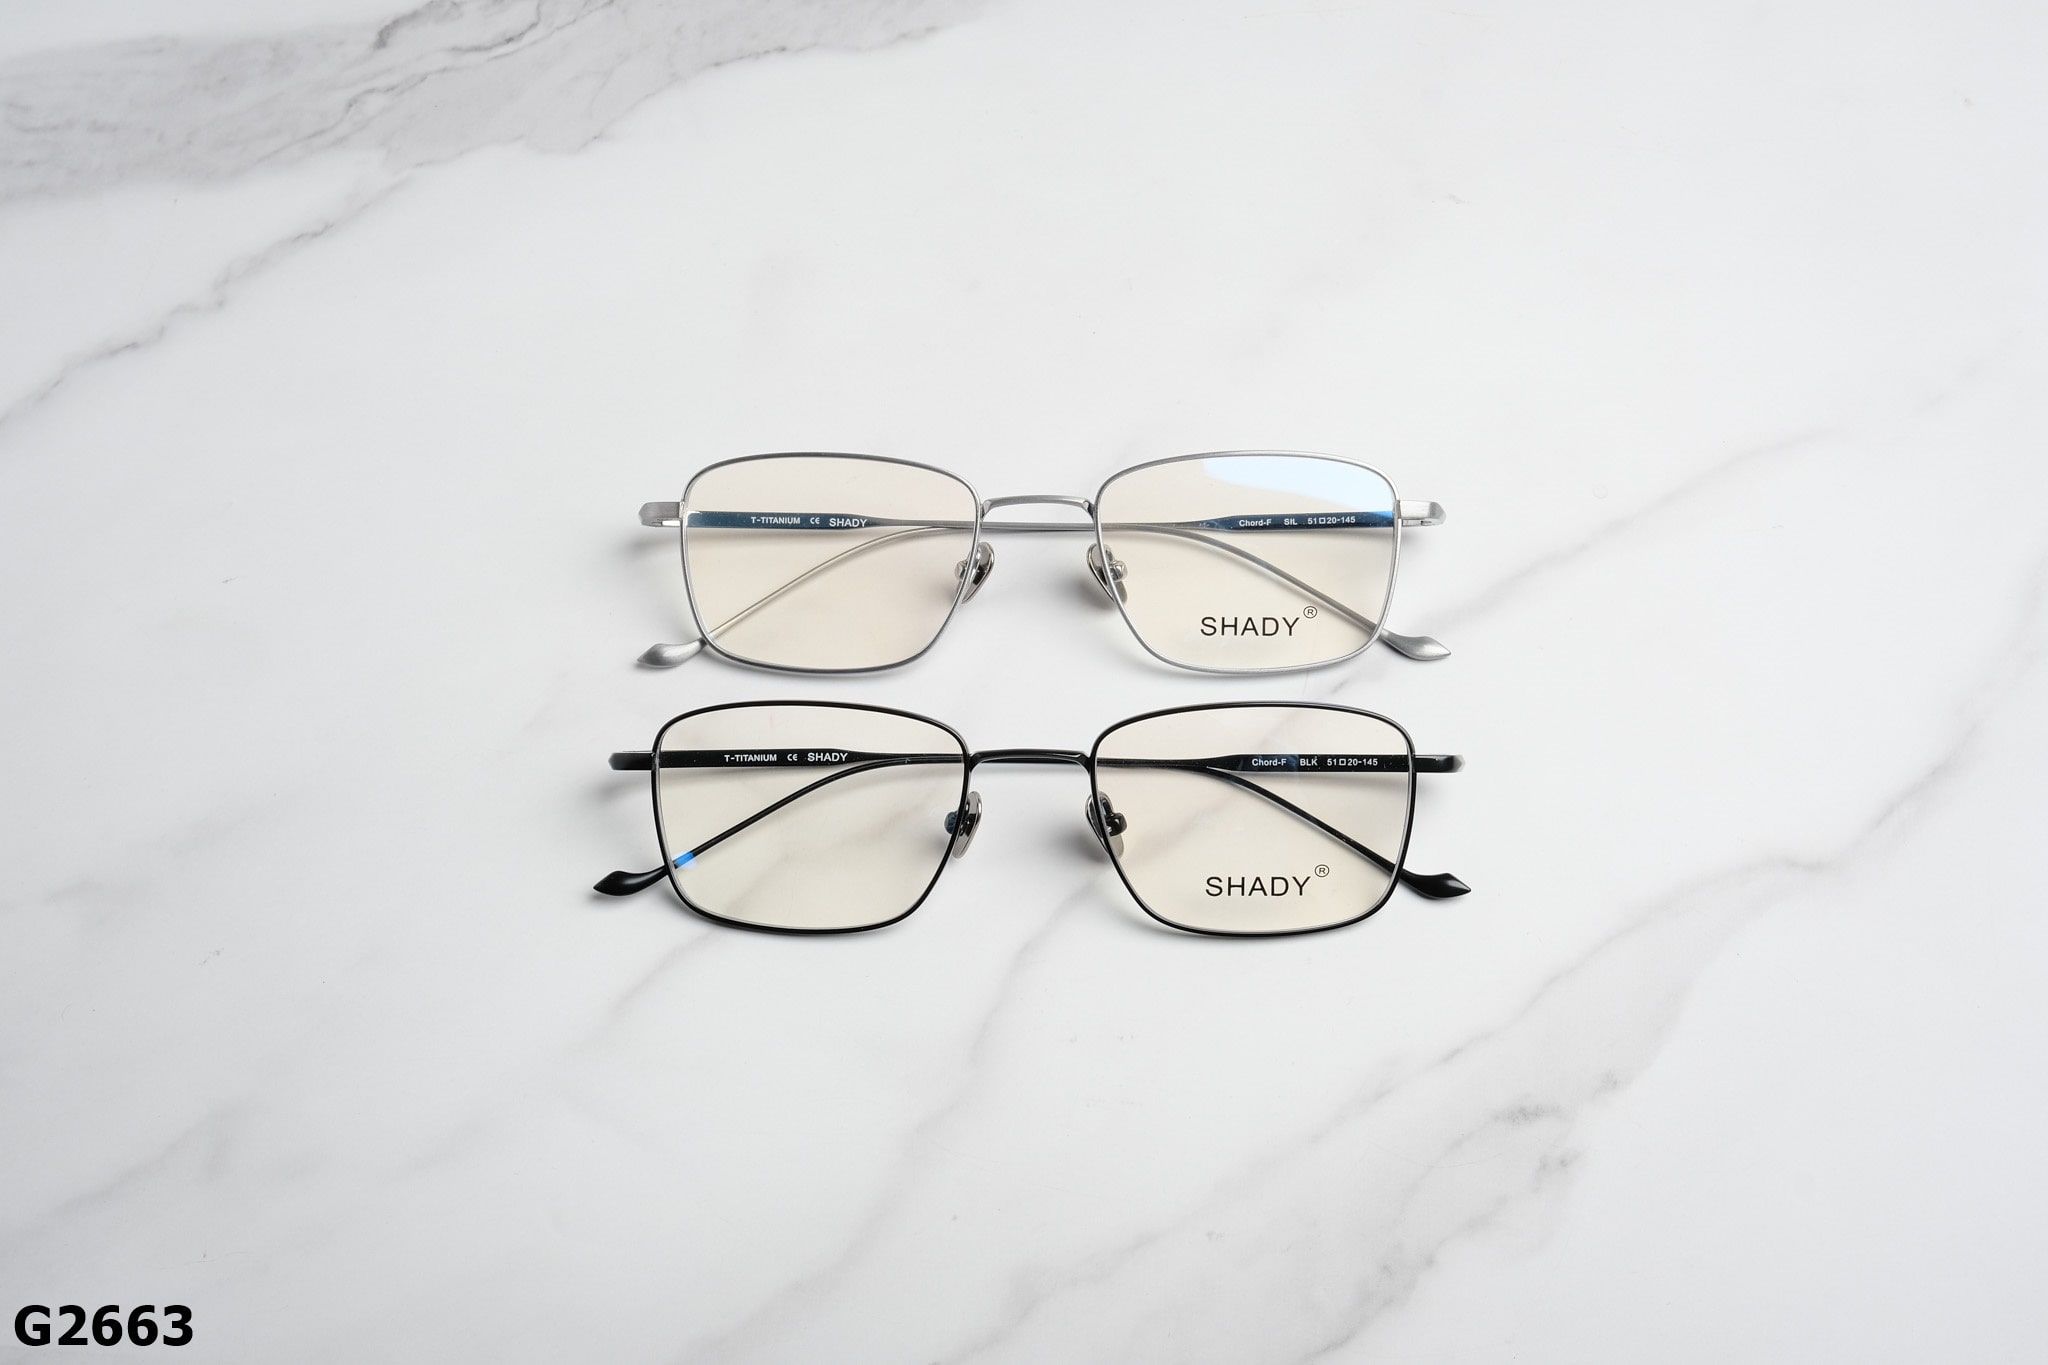  SHADY Eyewear - Glasses - G2663 